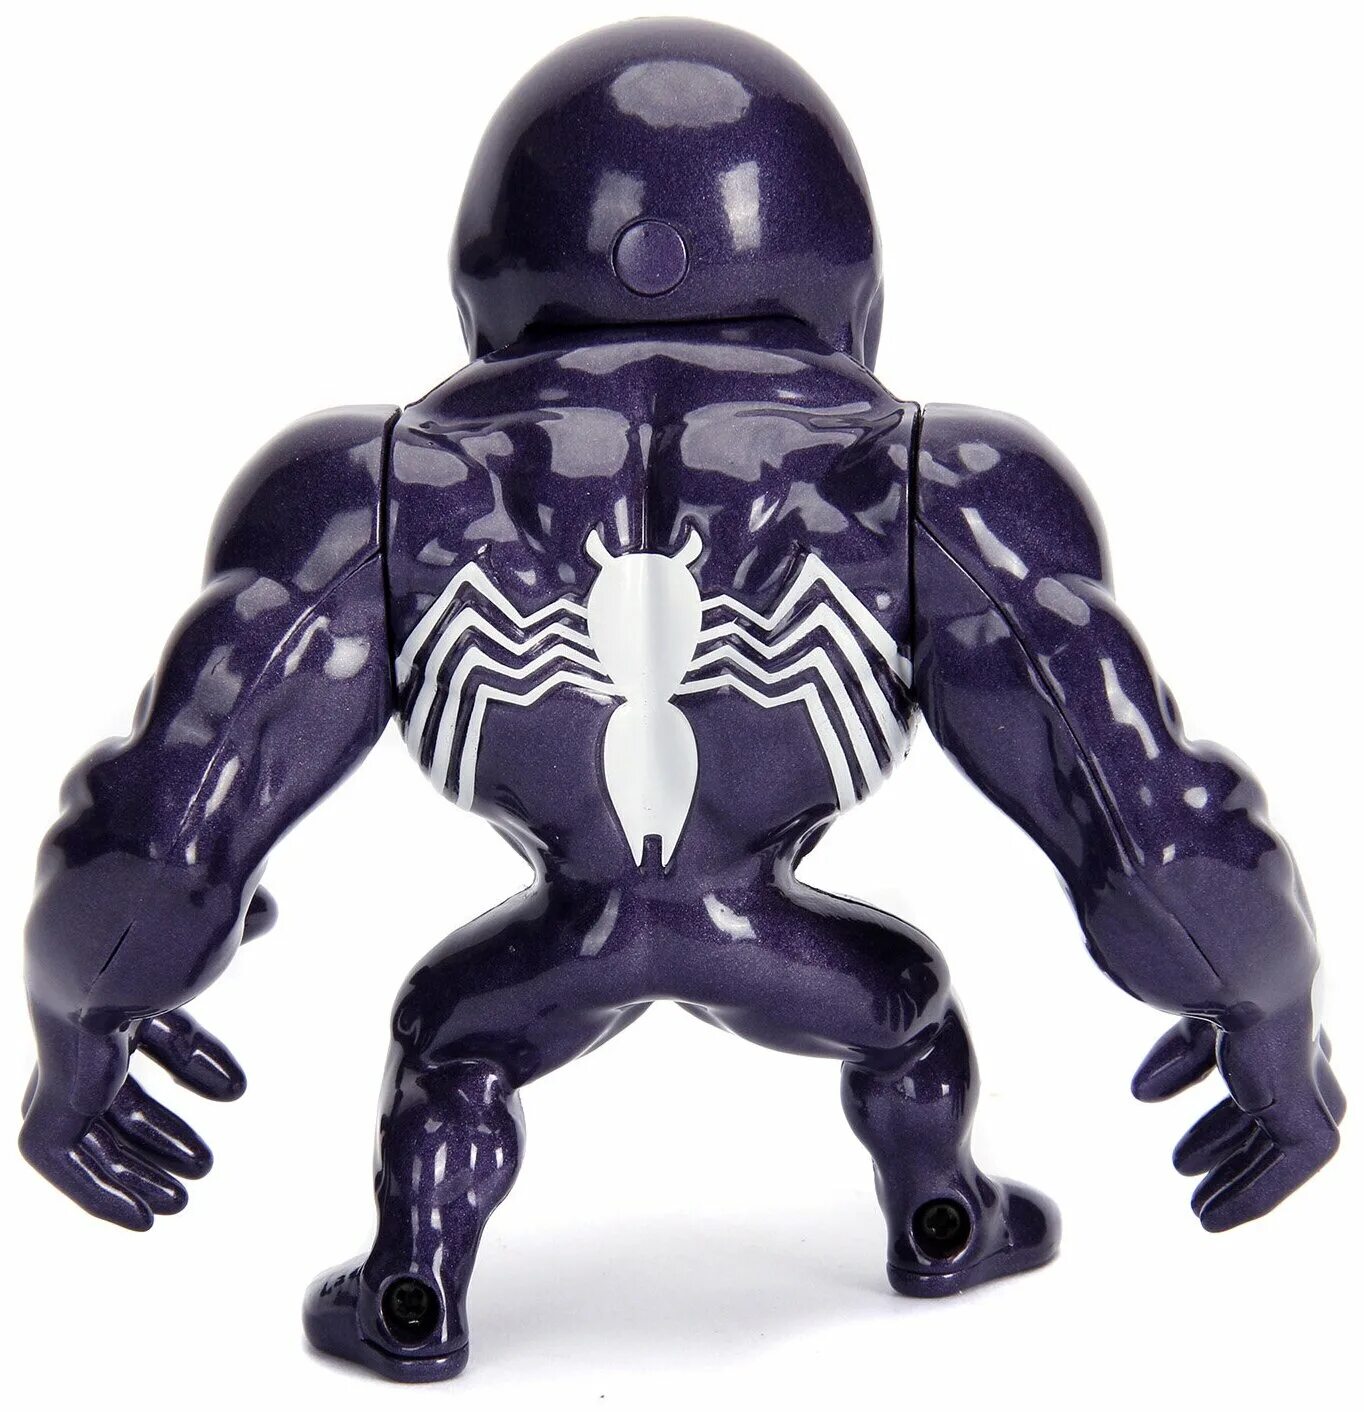 Toys фигурки. Веном Марвел. Фигурки Марвел Веном. Лего фигурки Марвел Веном. Ultimate Venom Figure.